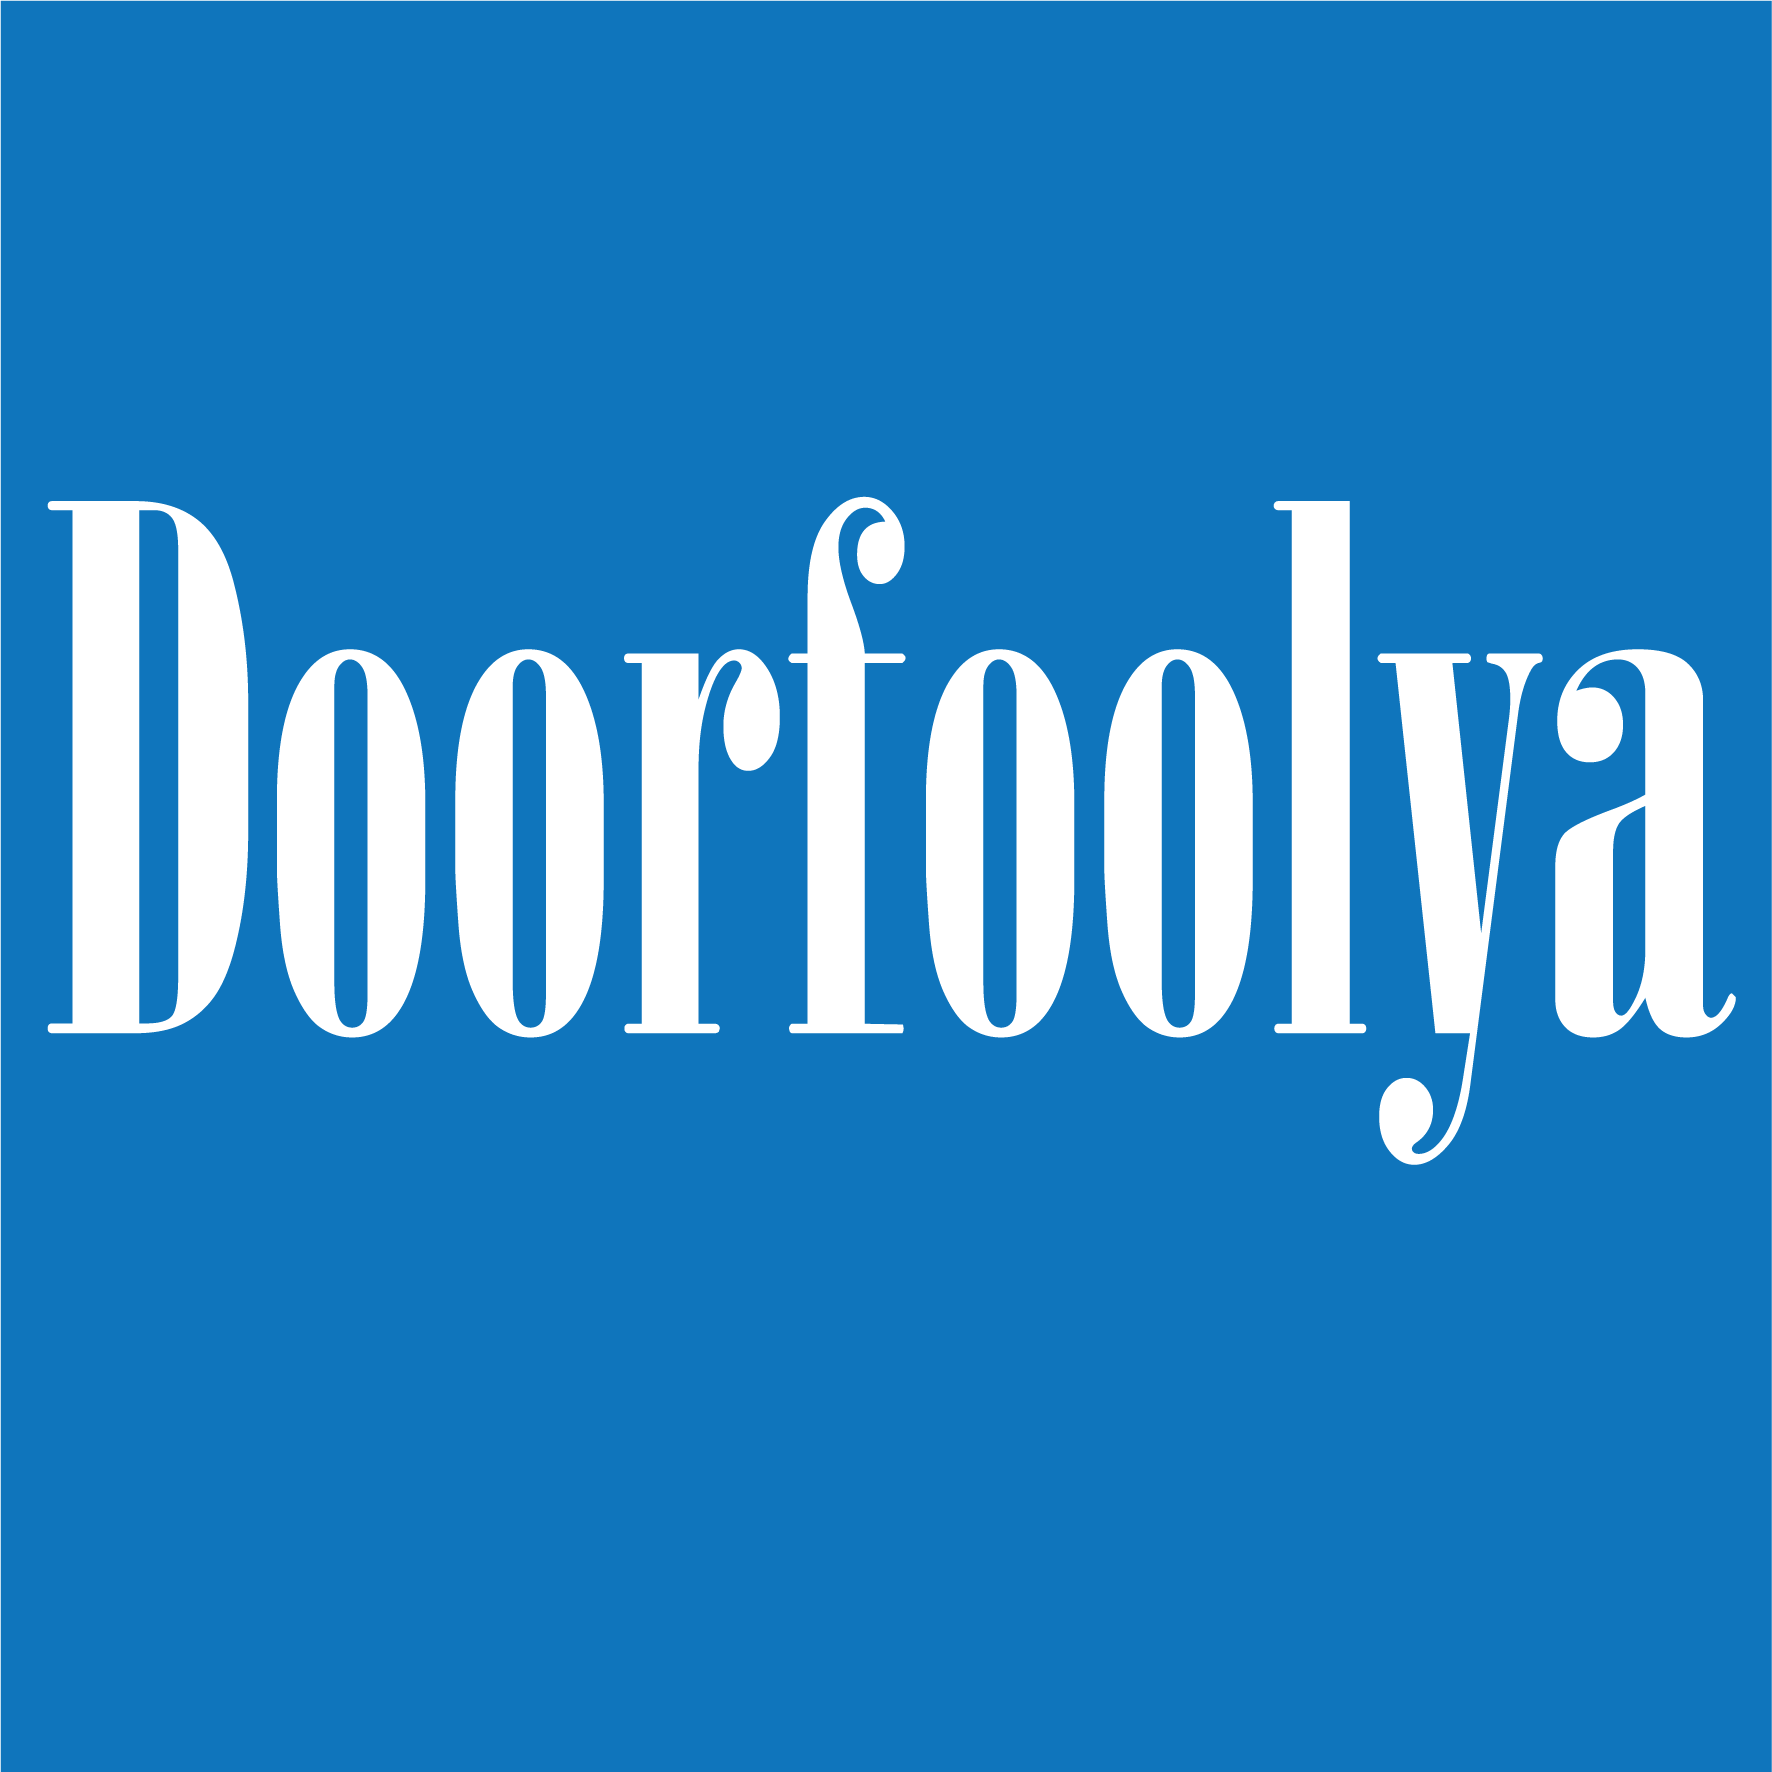 Doorfoolya